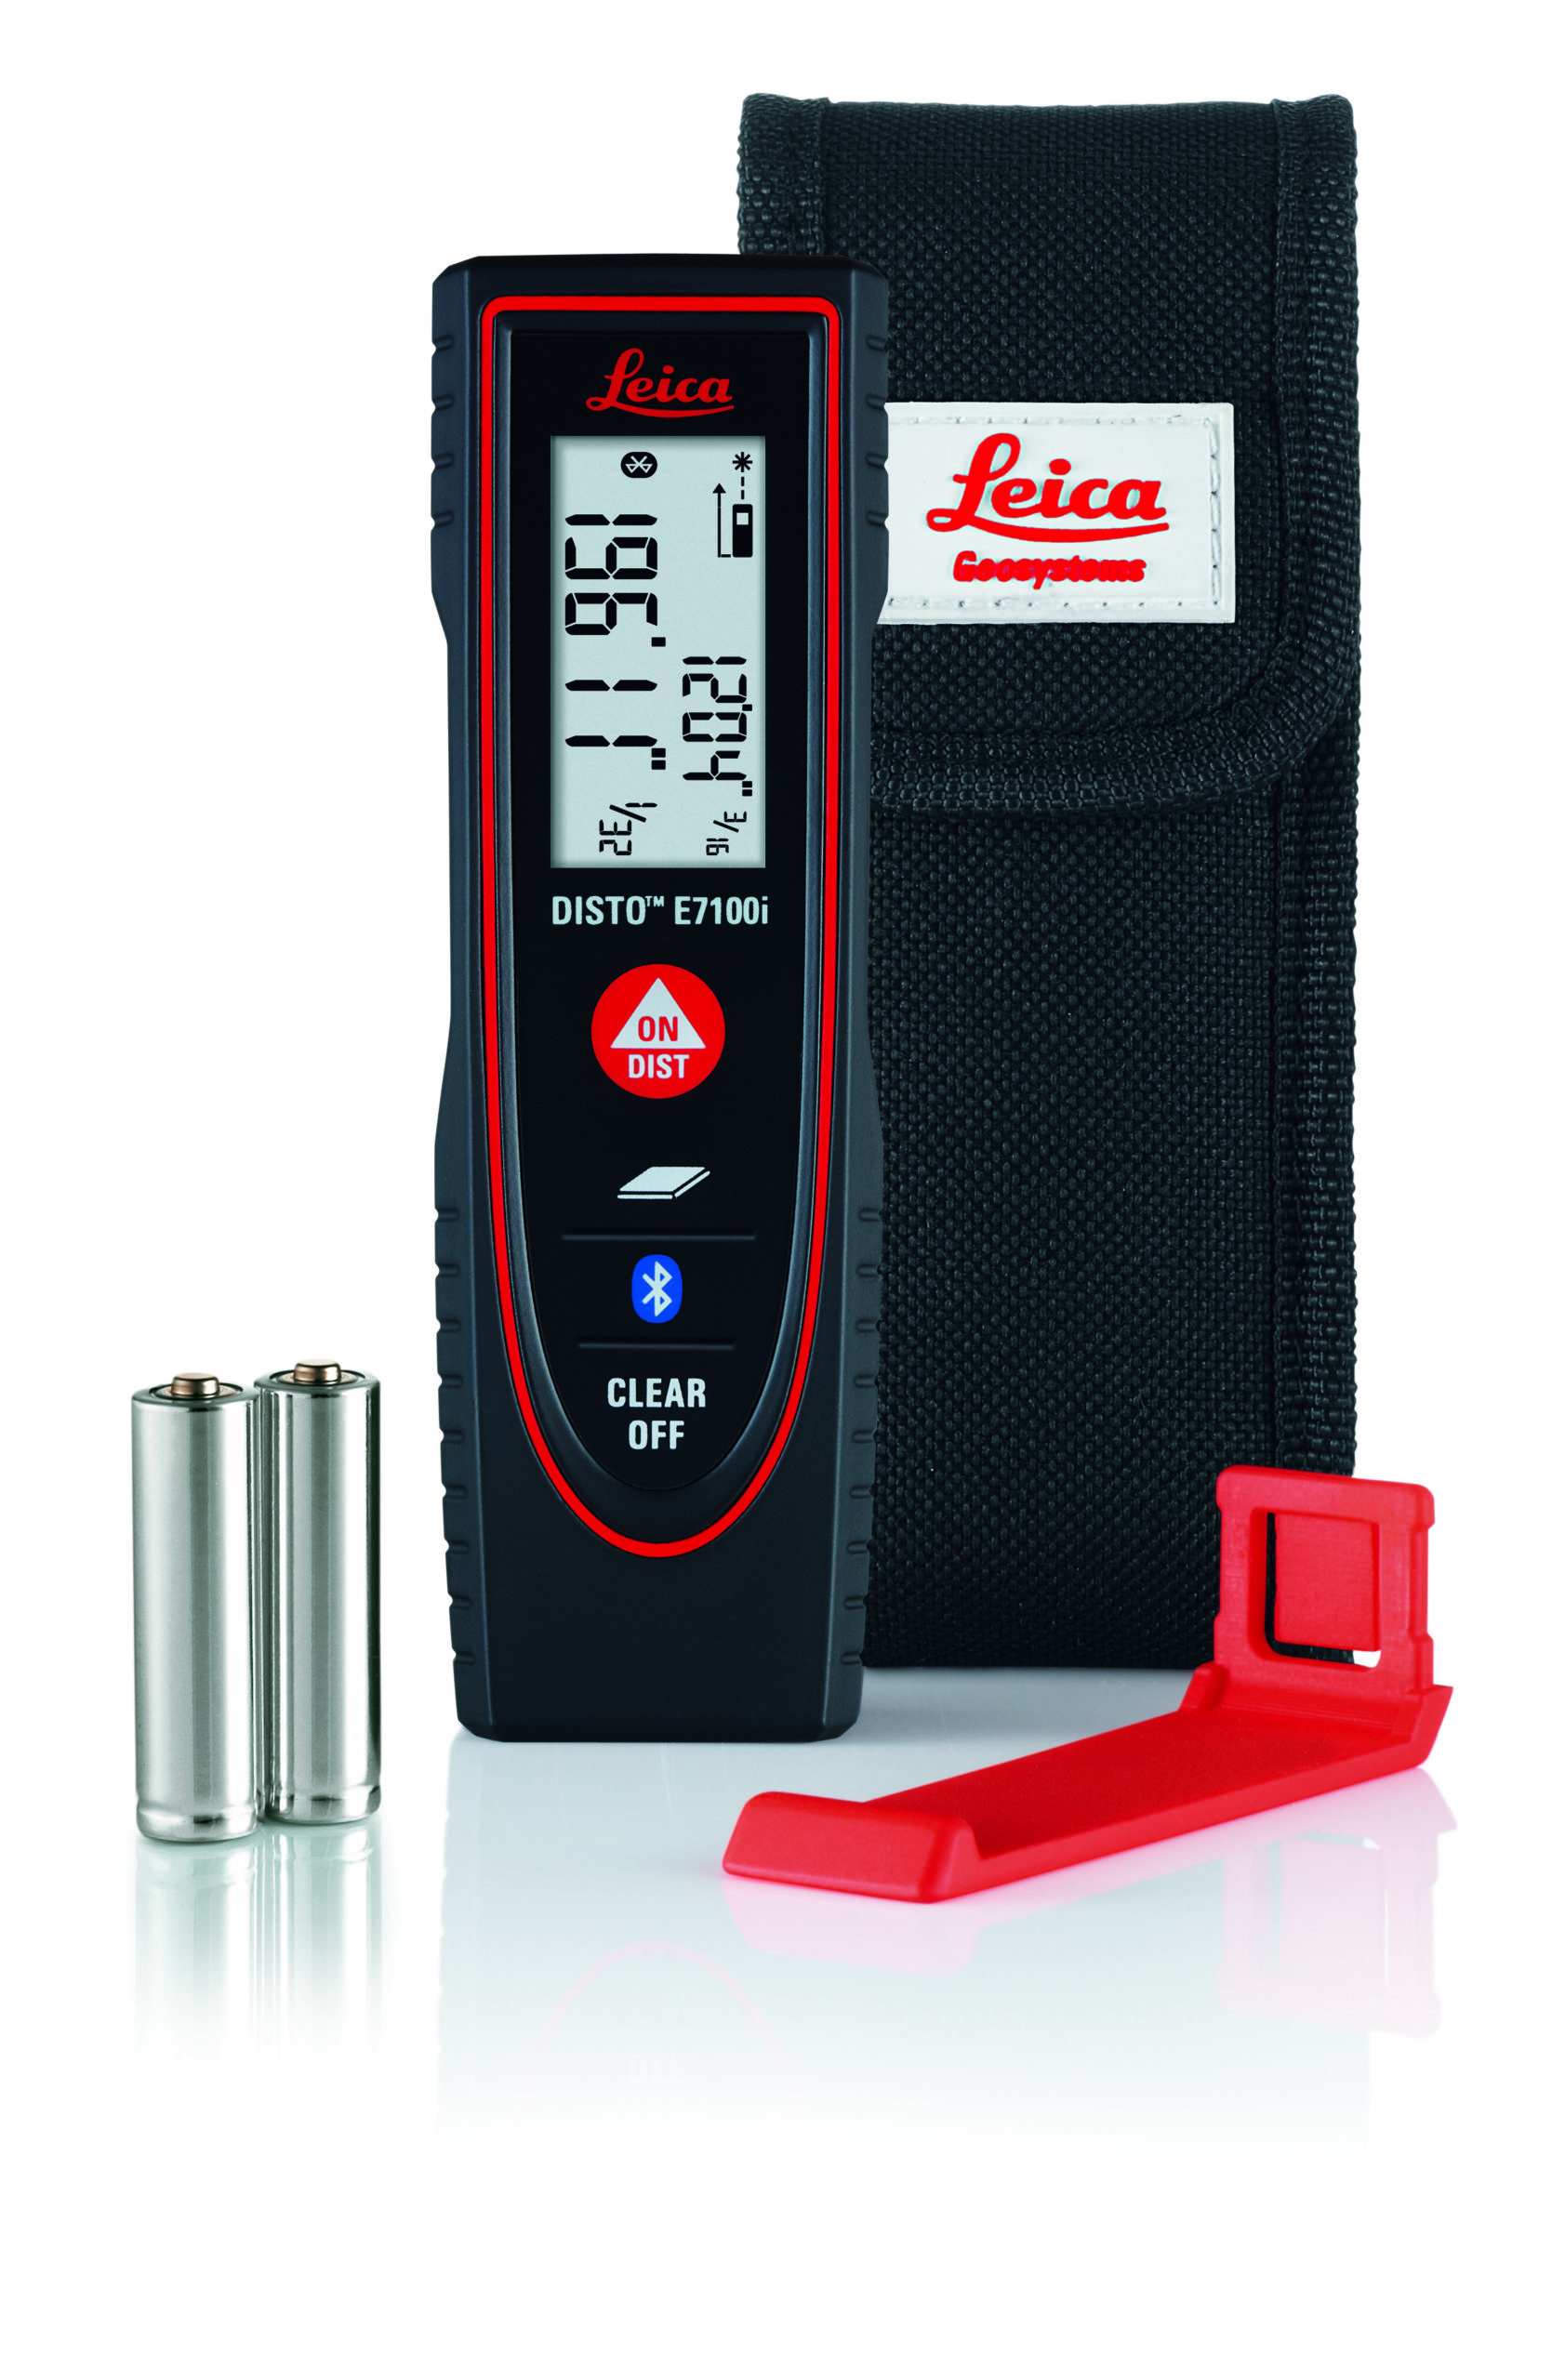 Leica Disto E7100I Laser Distance Meter with Bluetooth - Stallion Supplies